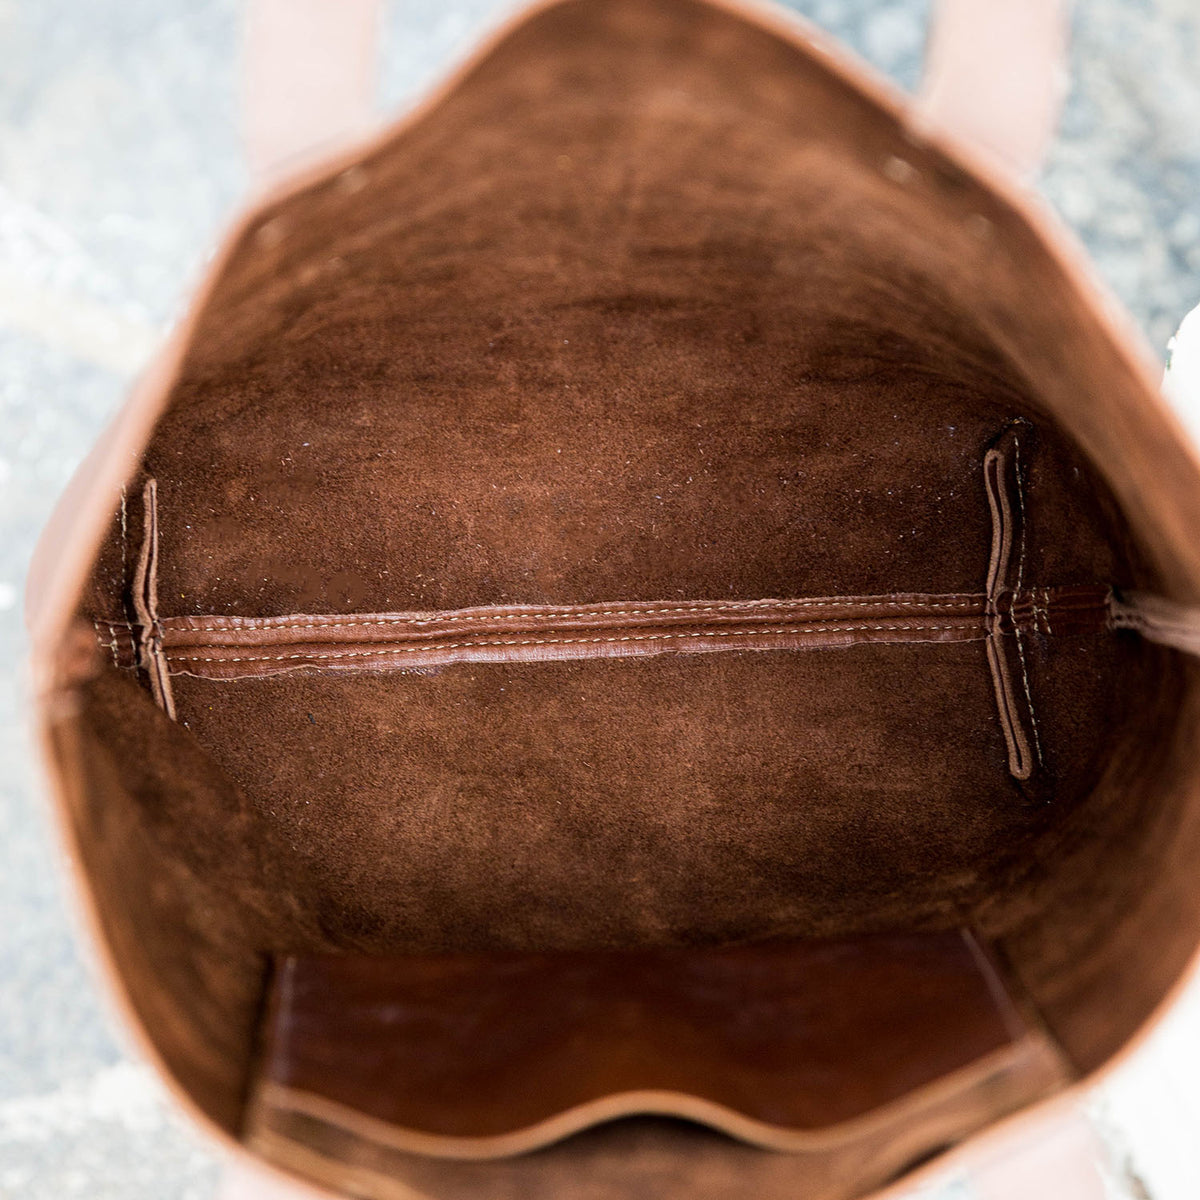 The Ashley Tote Fine Leather Handbag Purse Bag